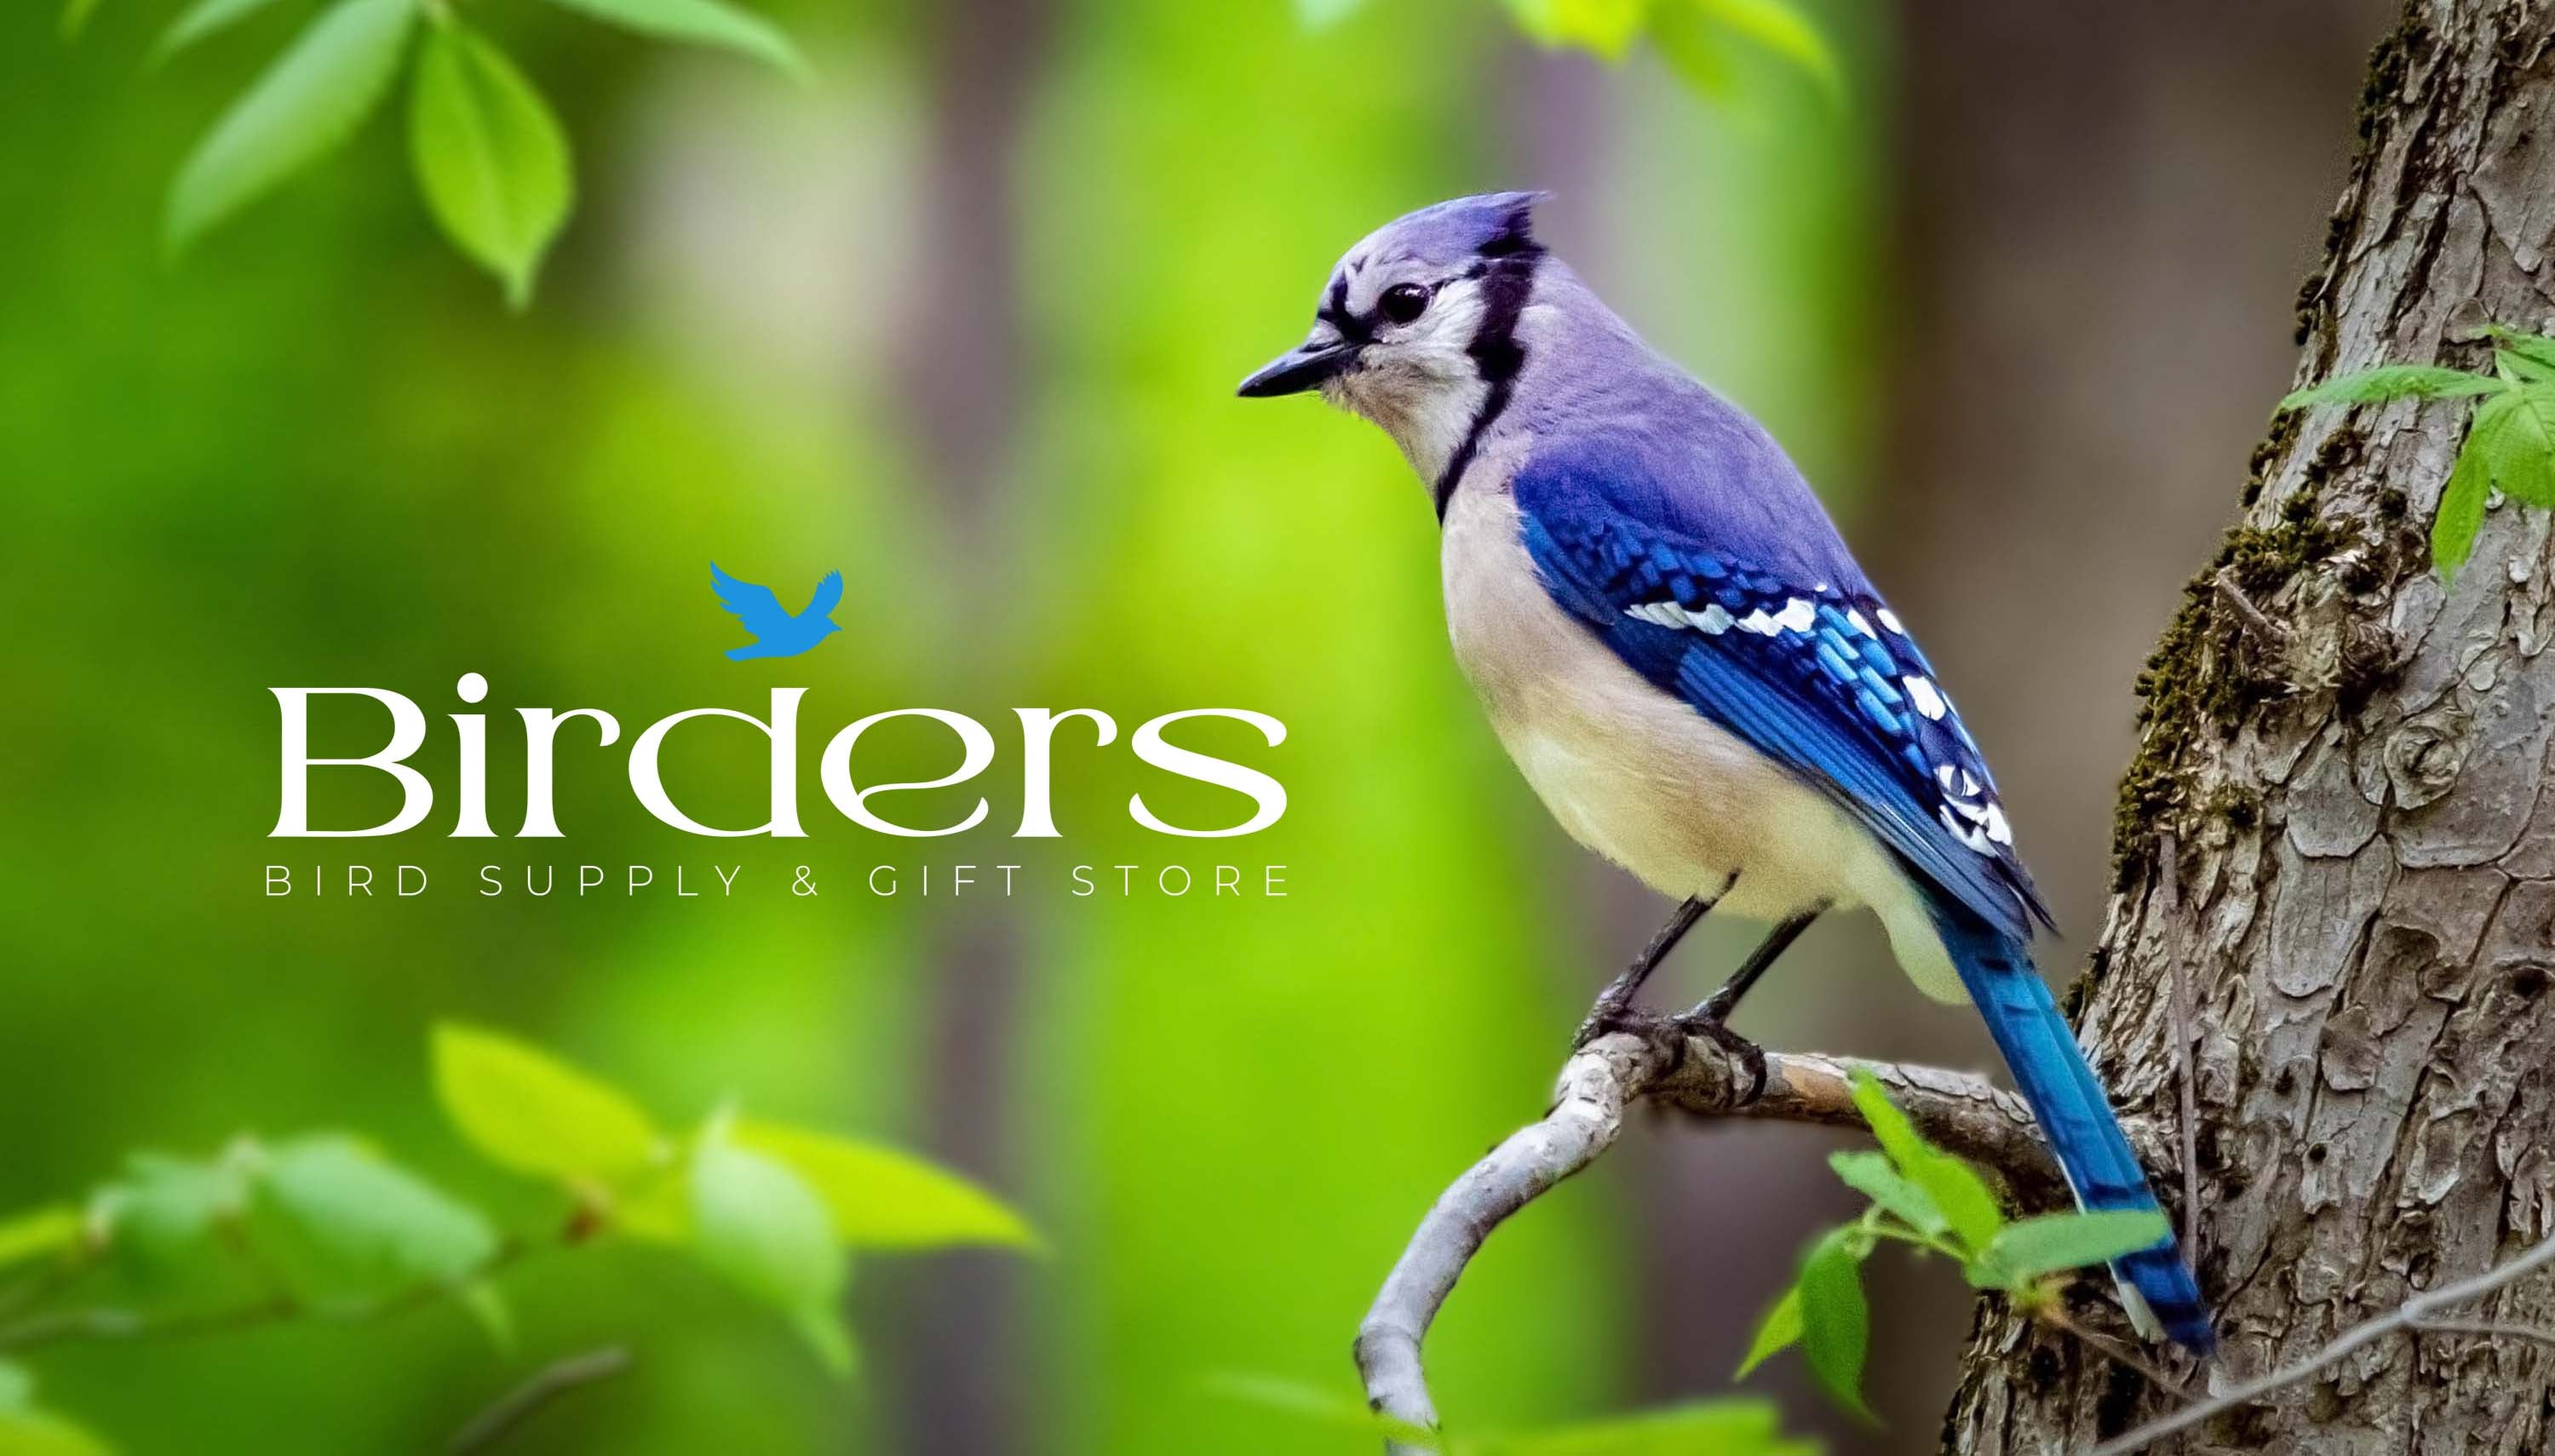 Birders Bird Supply & Gift Store